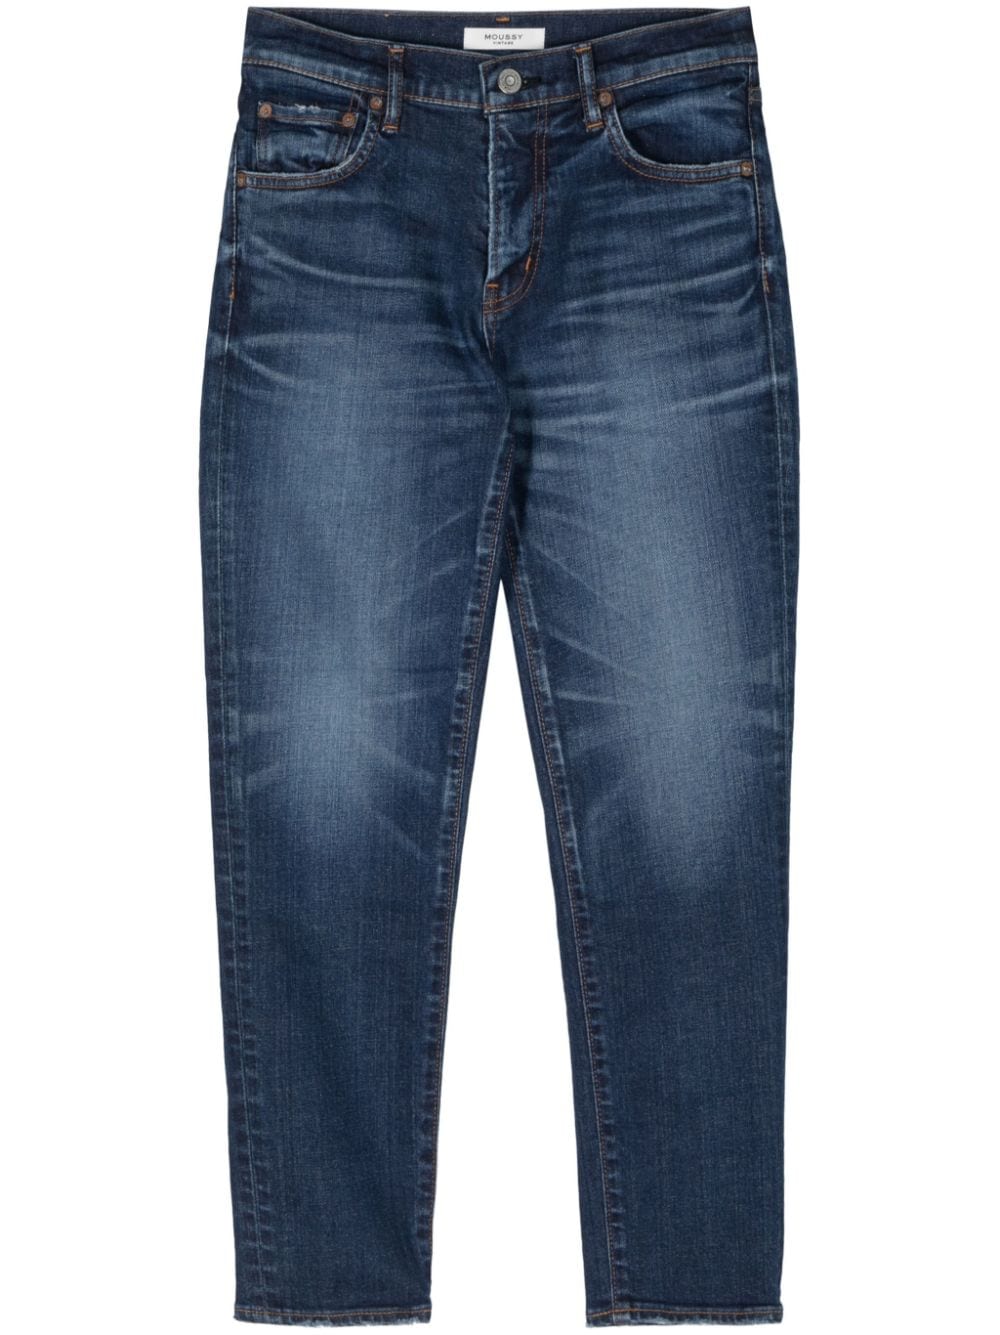 Providence skinny jeans